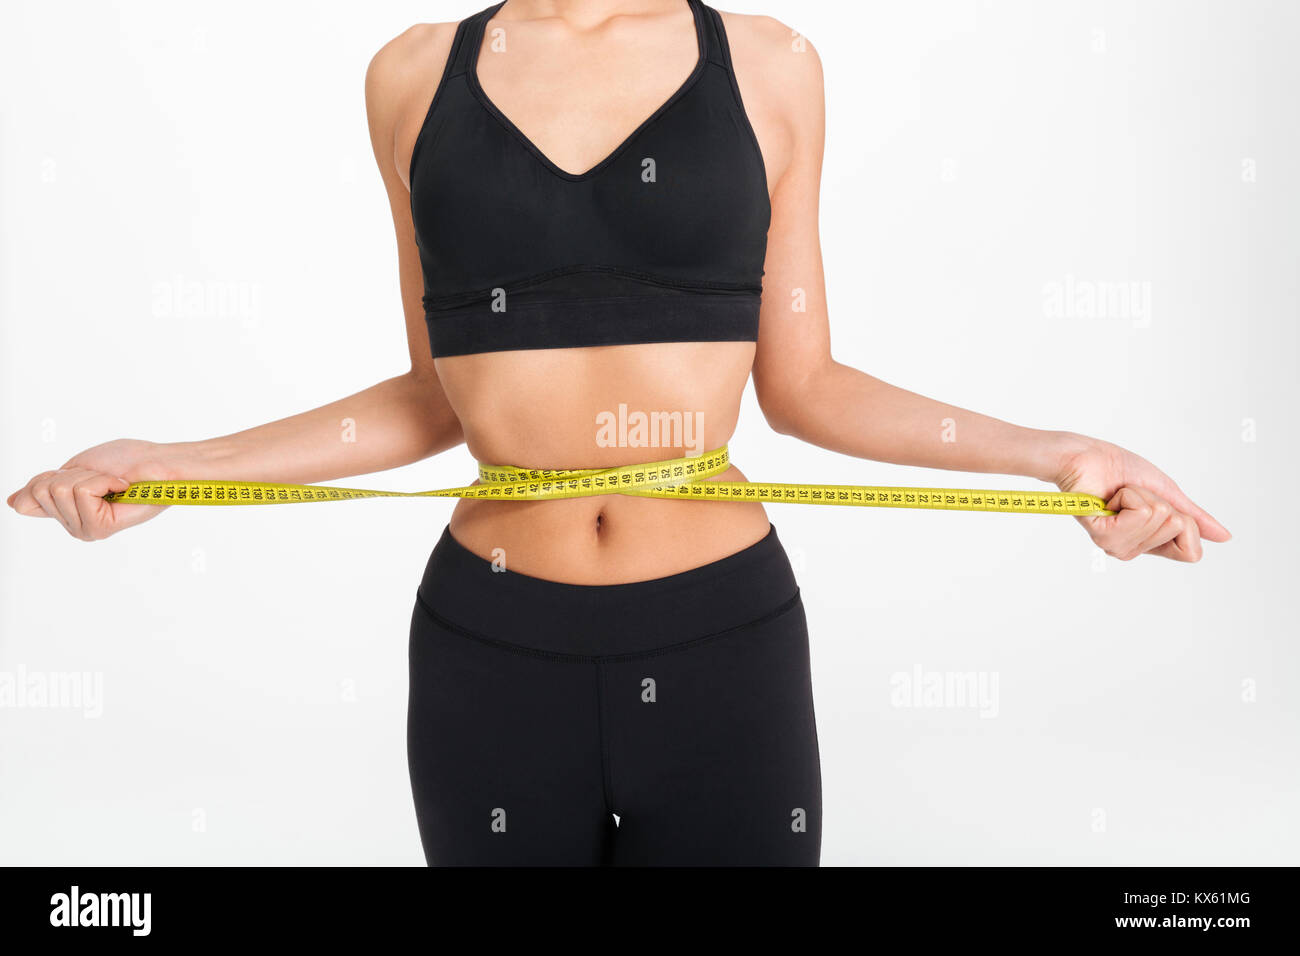 https://c8.alamy.com/comp/KX61MG/close-up-portrait-of-a-slim-fitness-woman-holding-measuring-tape-around-KX61MG.jpg